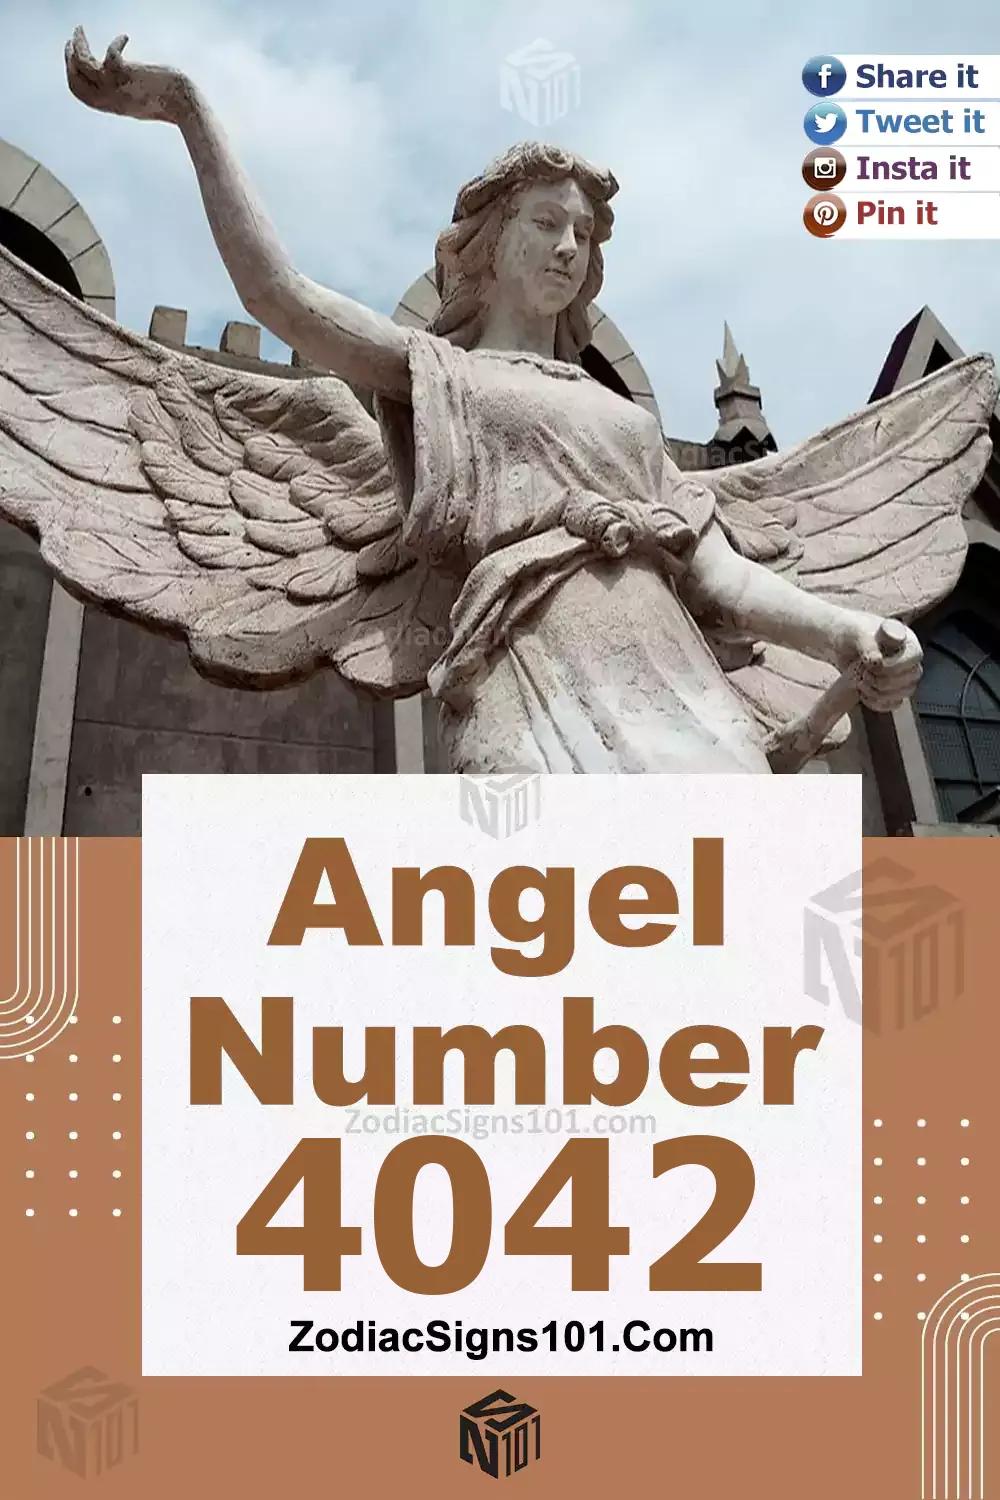 4042-Angel-Number-Meaning.jpg